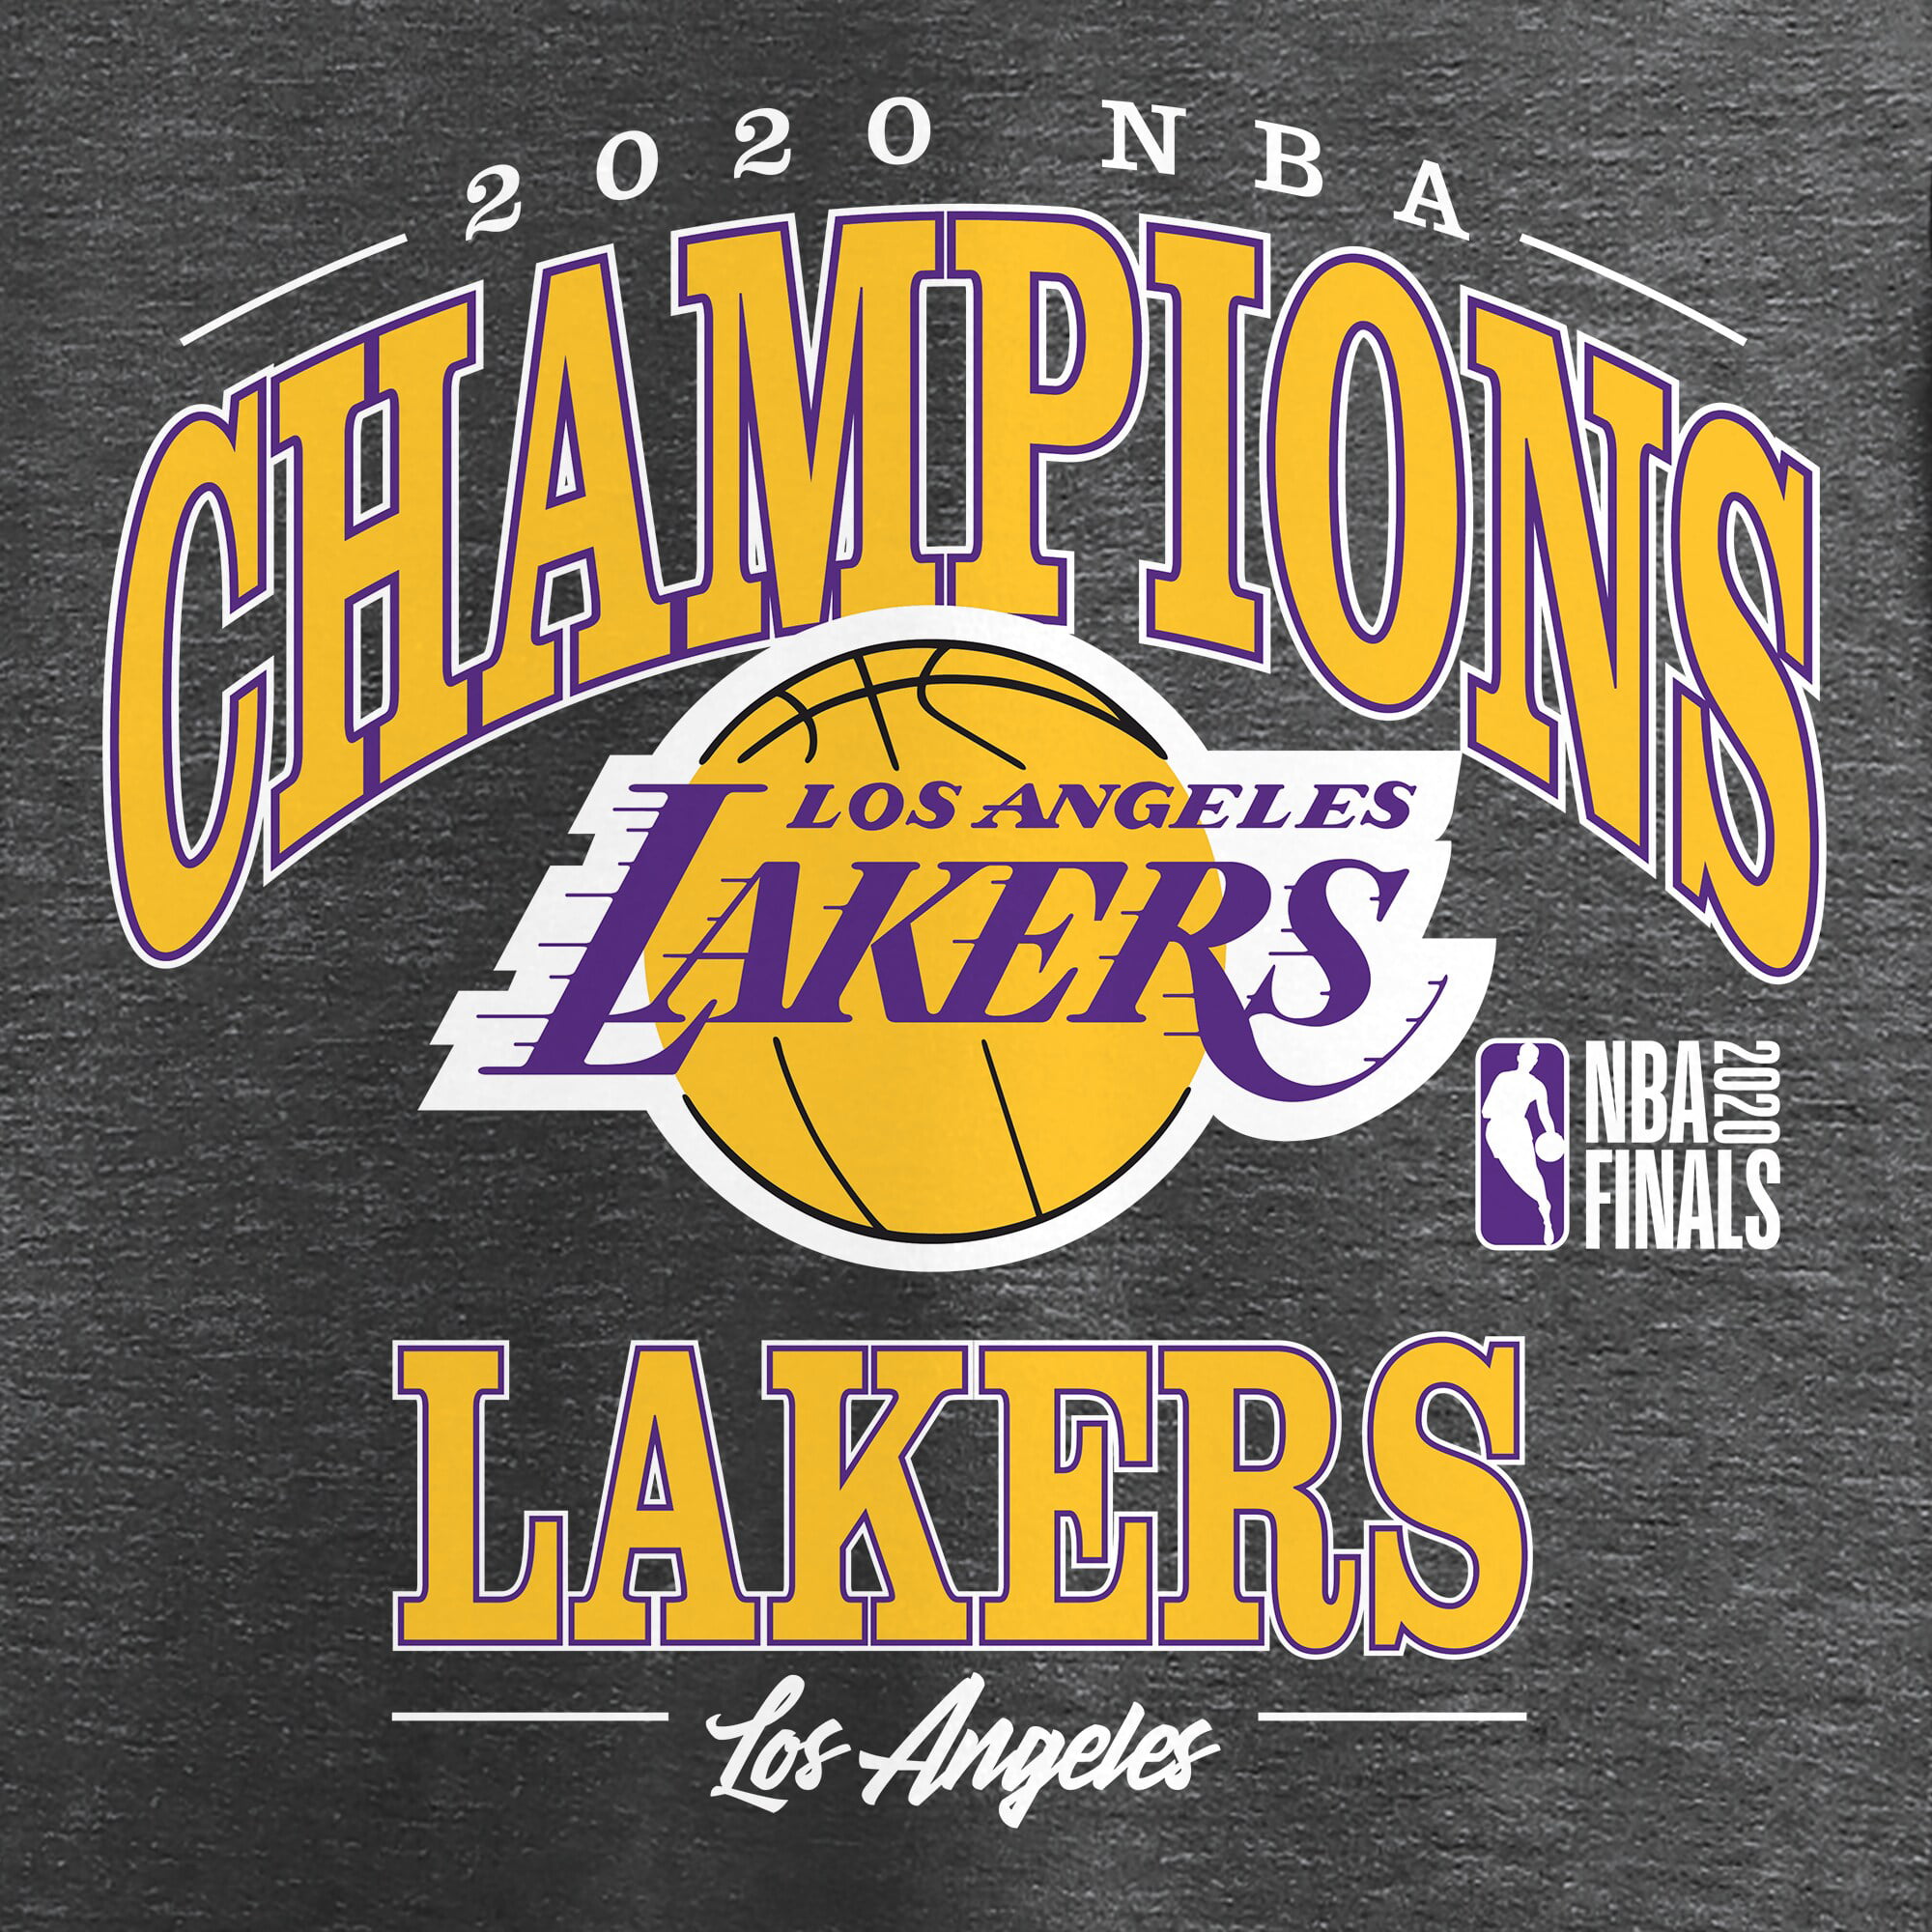 LA Lakers 2020 NBA Finals Champions Youth T-Shirt